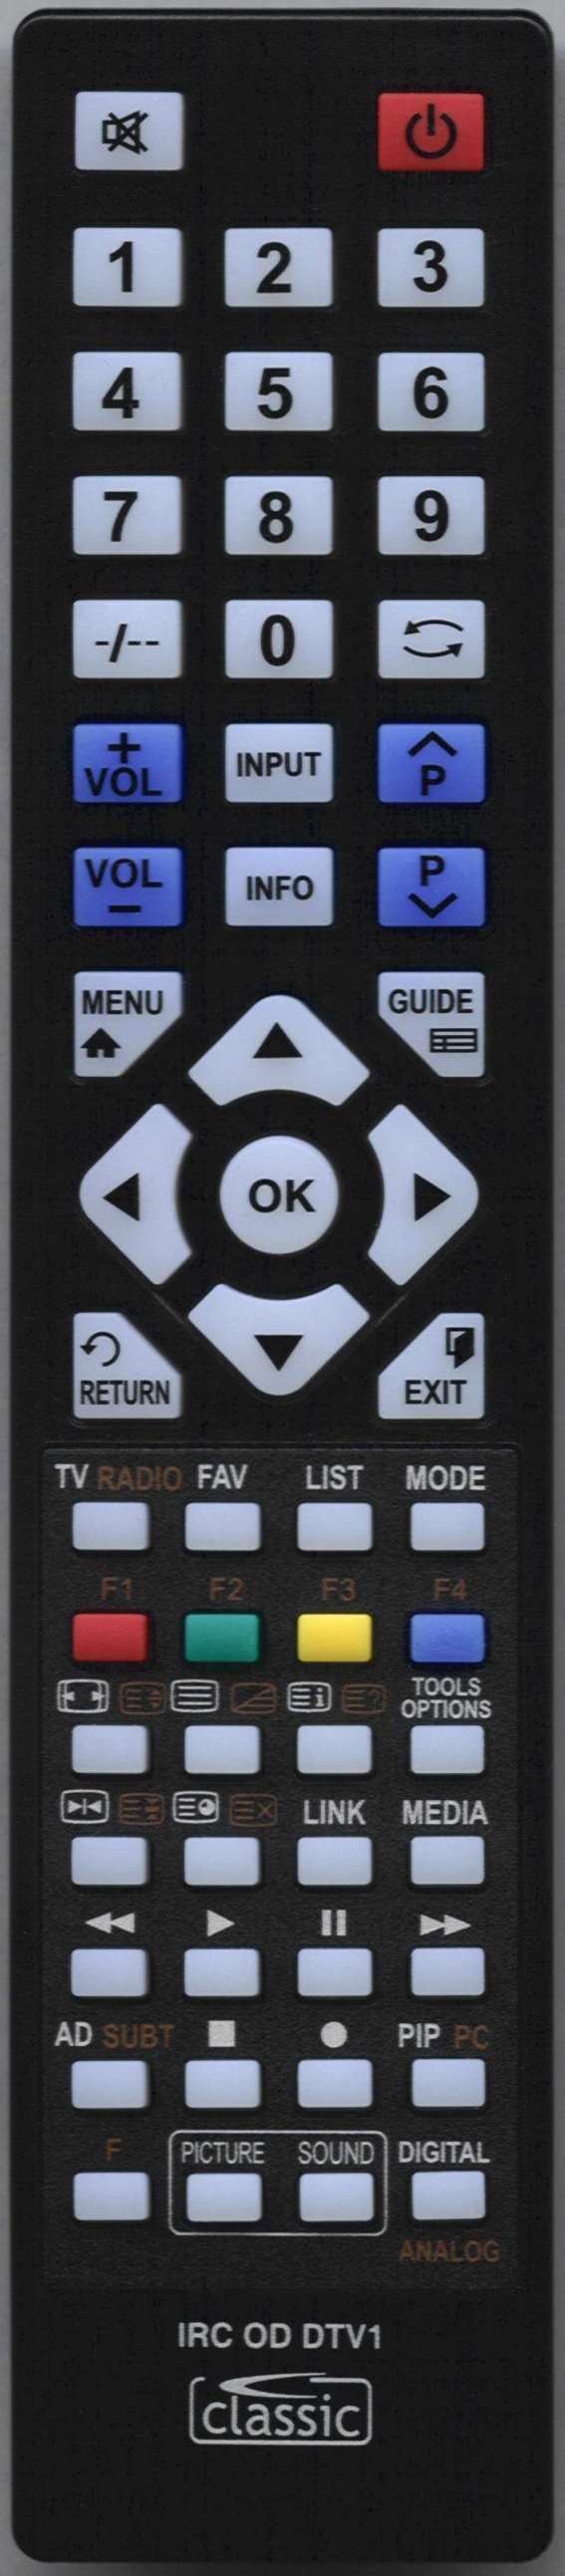 ALBA CTV 6682 Remote Control Alternative